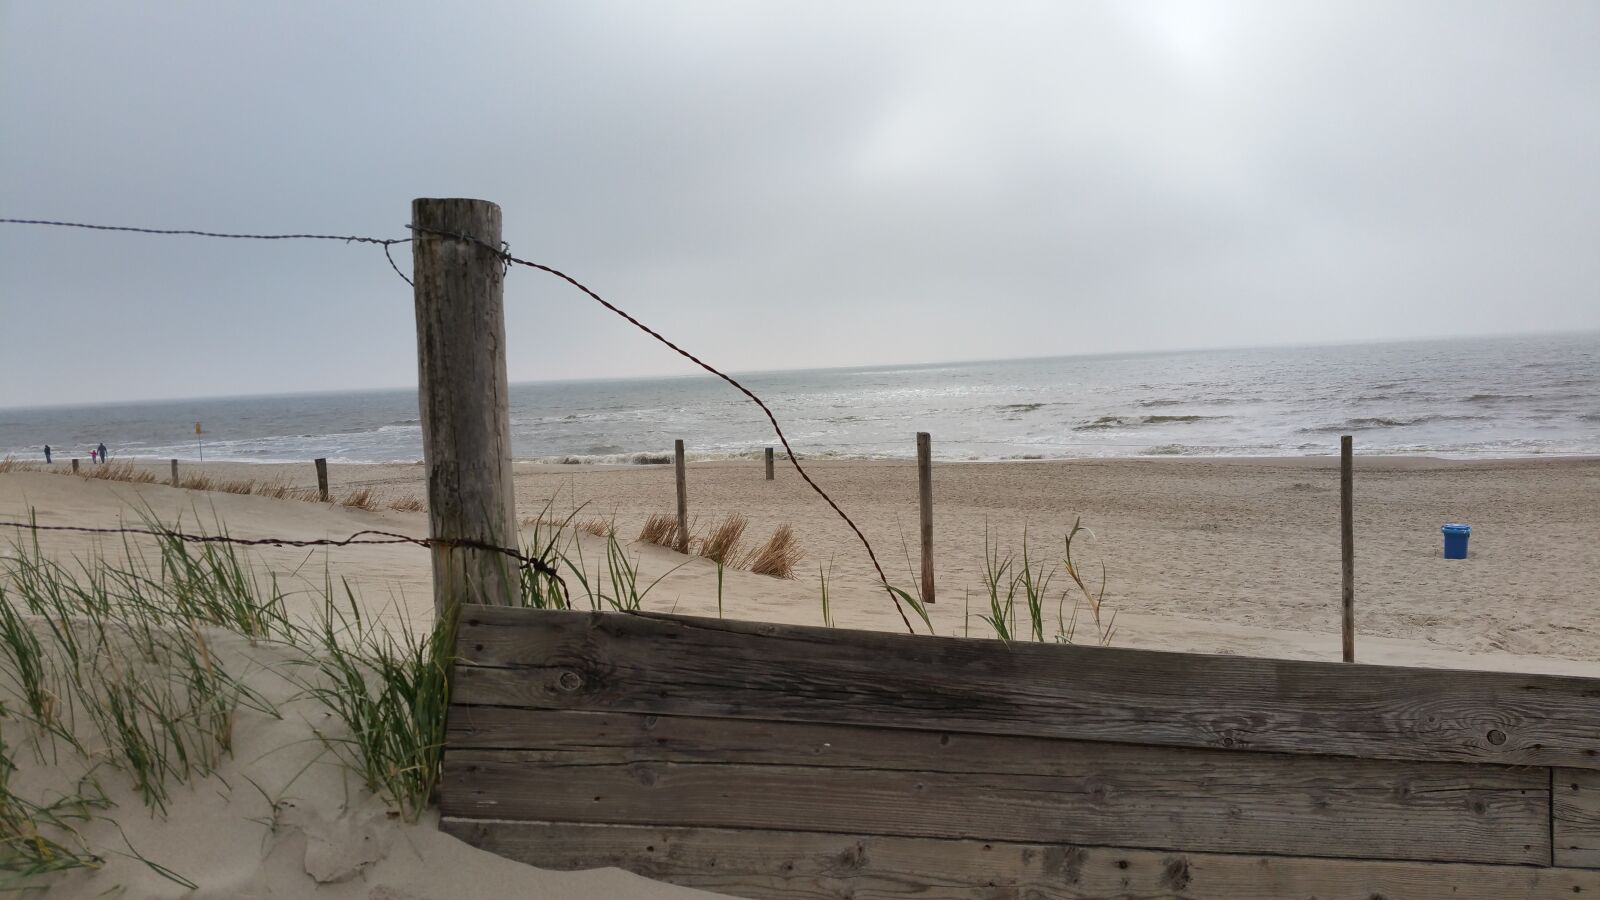 Samsung Galaxy S5 LTE-A sample photo. Beach, empty beach, wooden photography